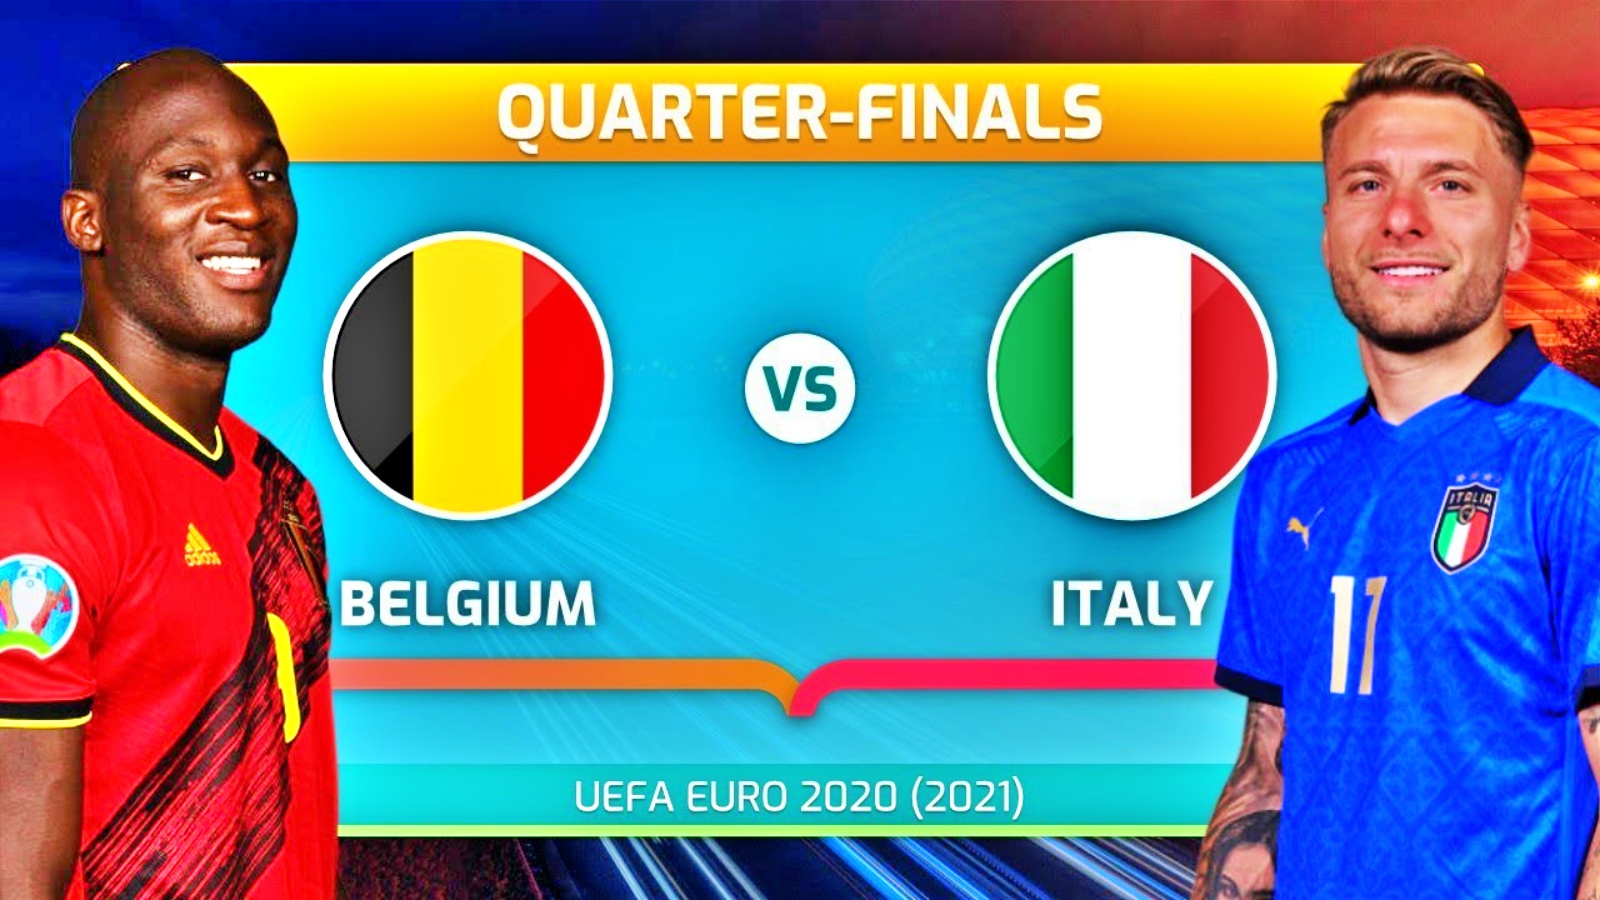 BELGIQUE - ITALIE PRO TV LIVE EURO 2020